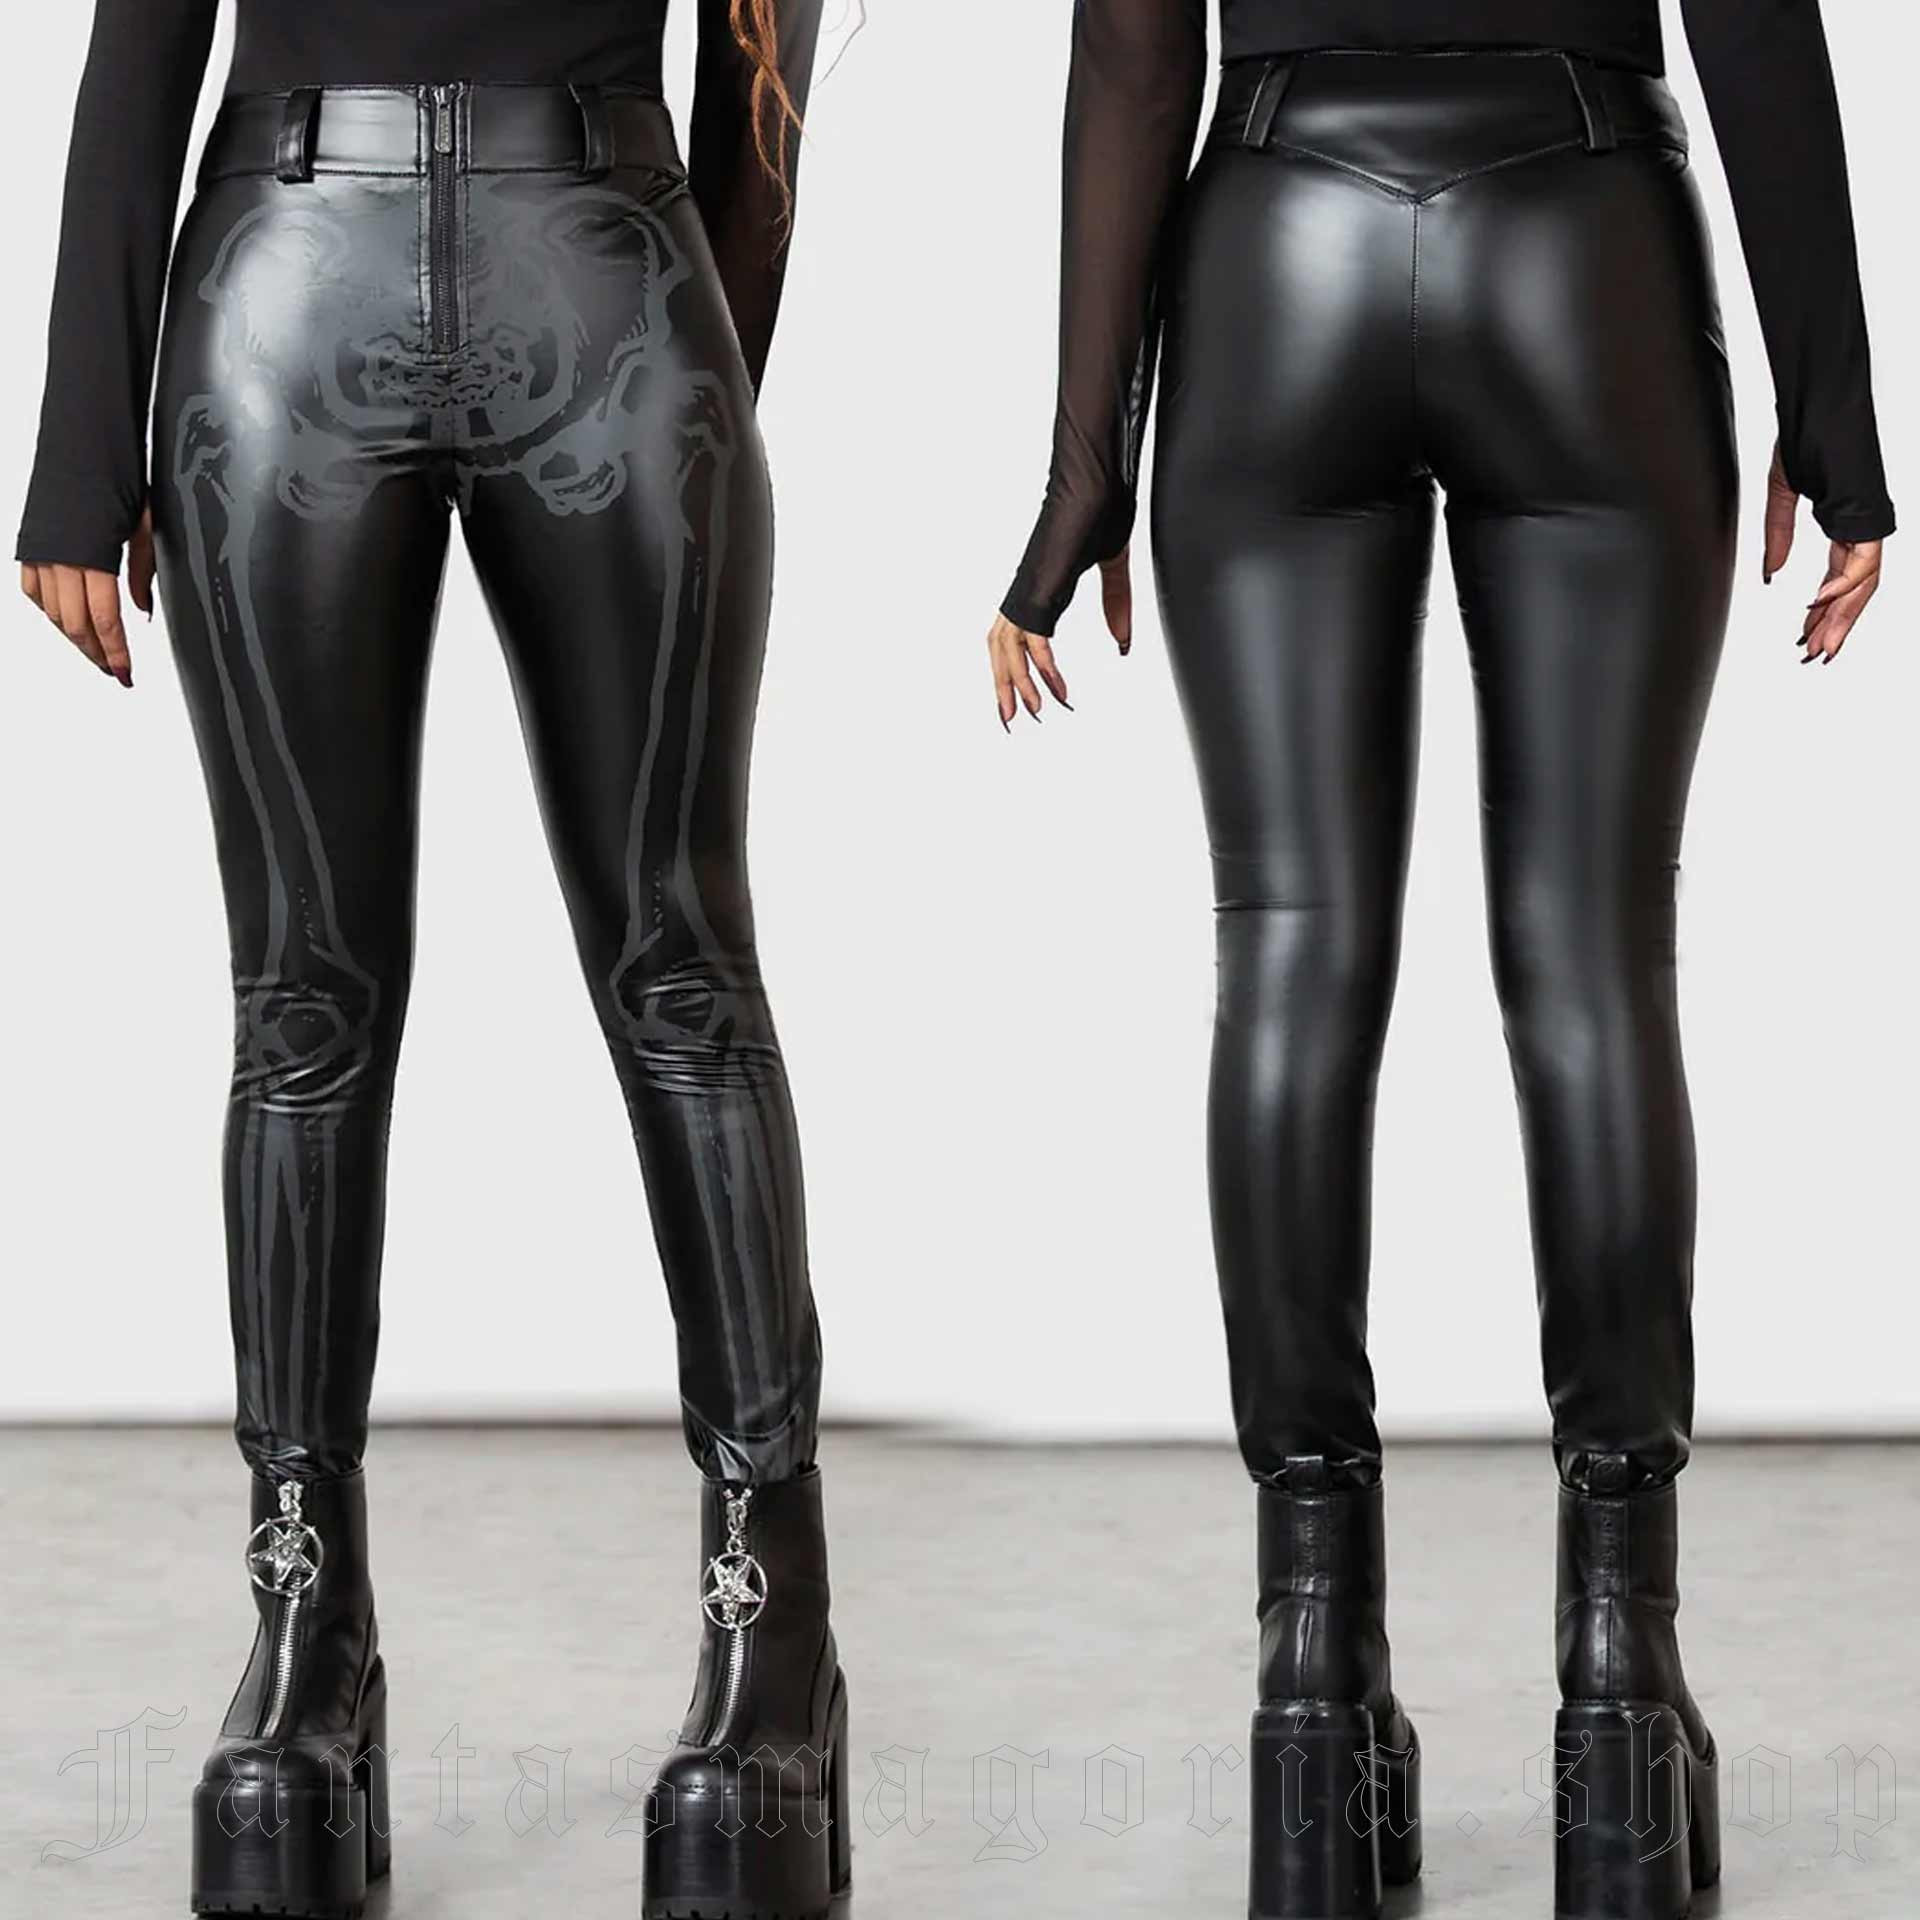 Black Cotton Spandex Lace-Waist Leggings XS S M L XL 2XL 3XL plus size  pants